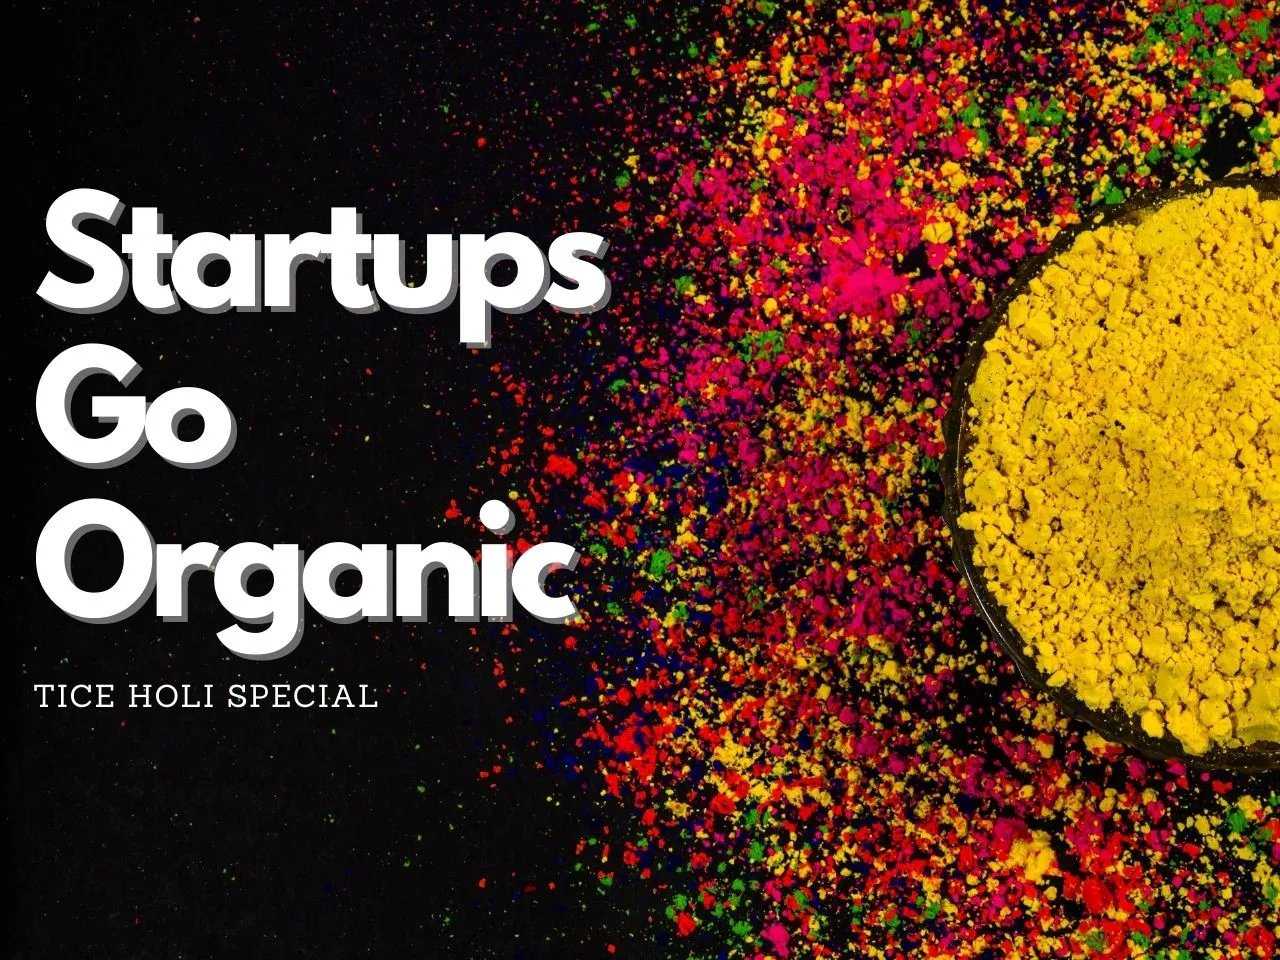 TICE Holi Special - Startups Go Organic